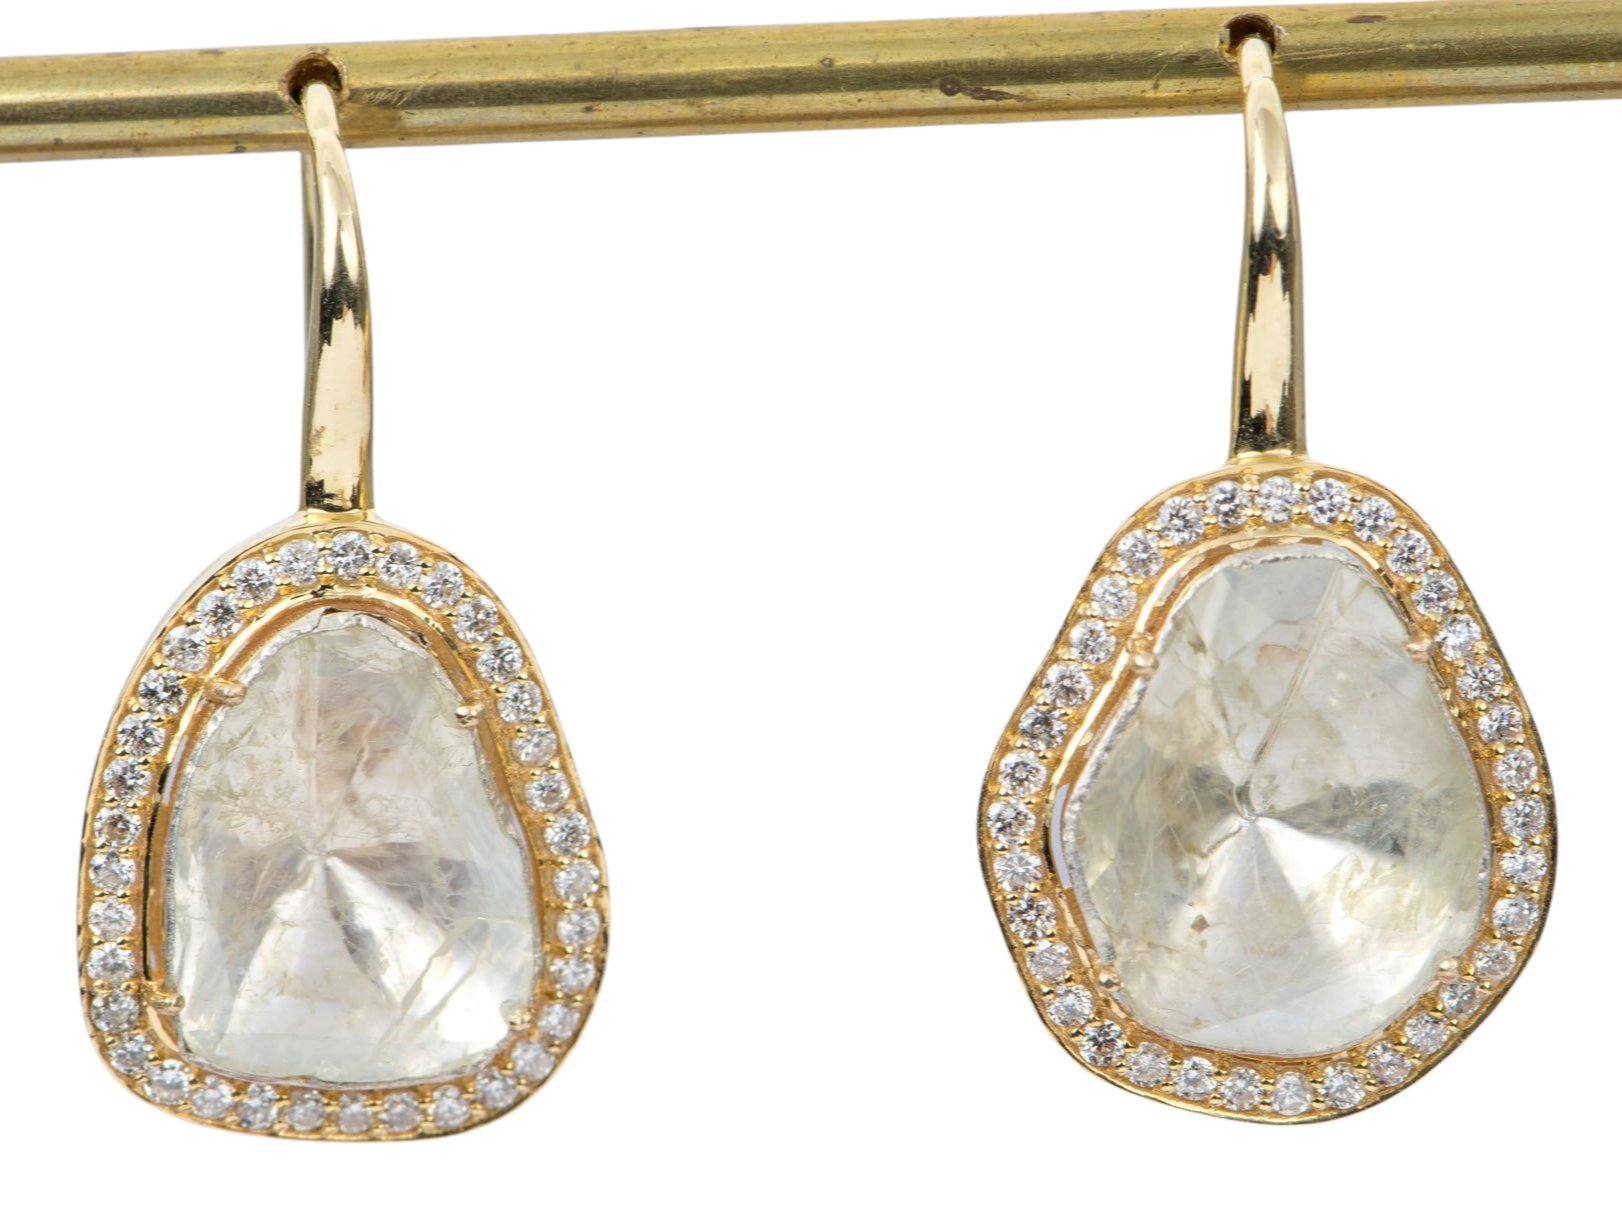 Ethical Sustainable 1/3ctw Diamond Bezel Set Long Chain Dangle Gold Stud Earrings 14K Yellow Gold